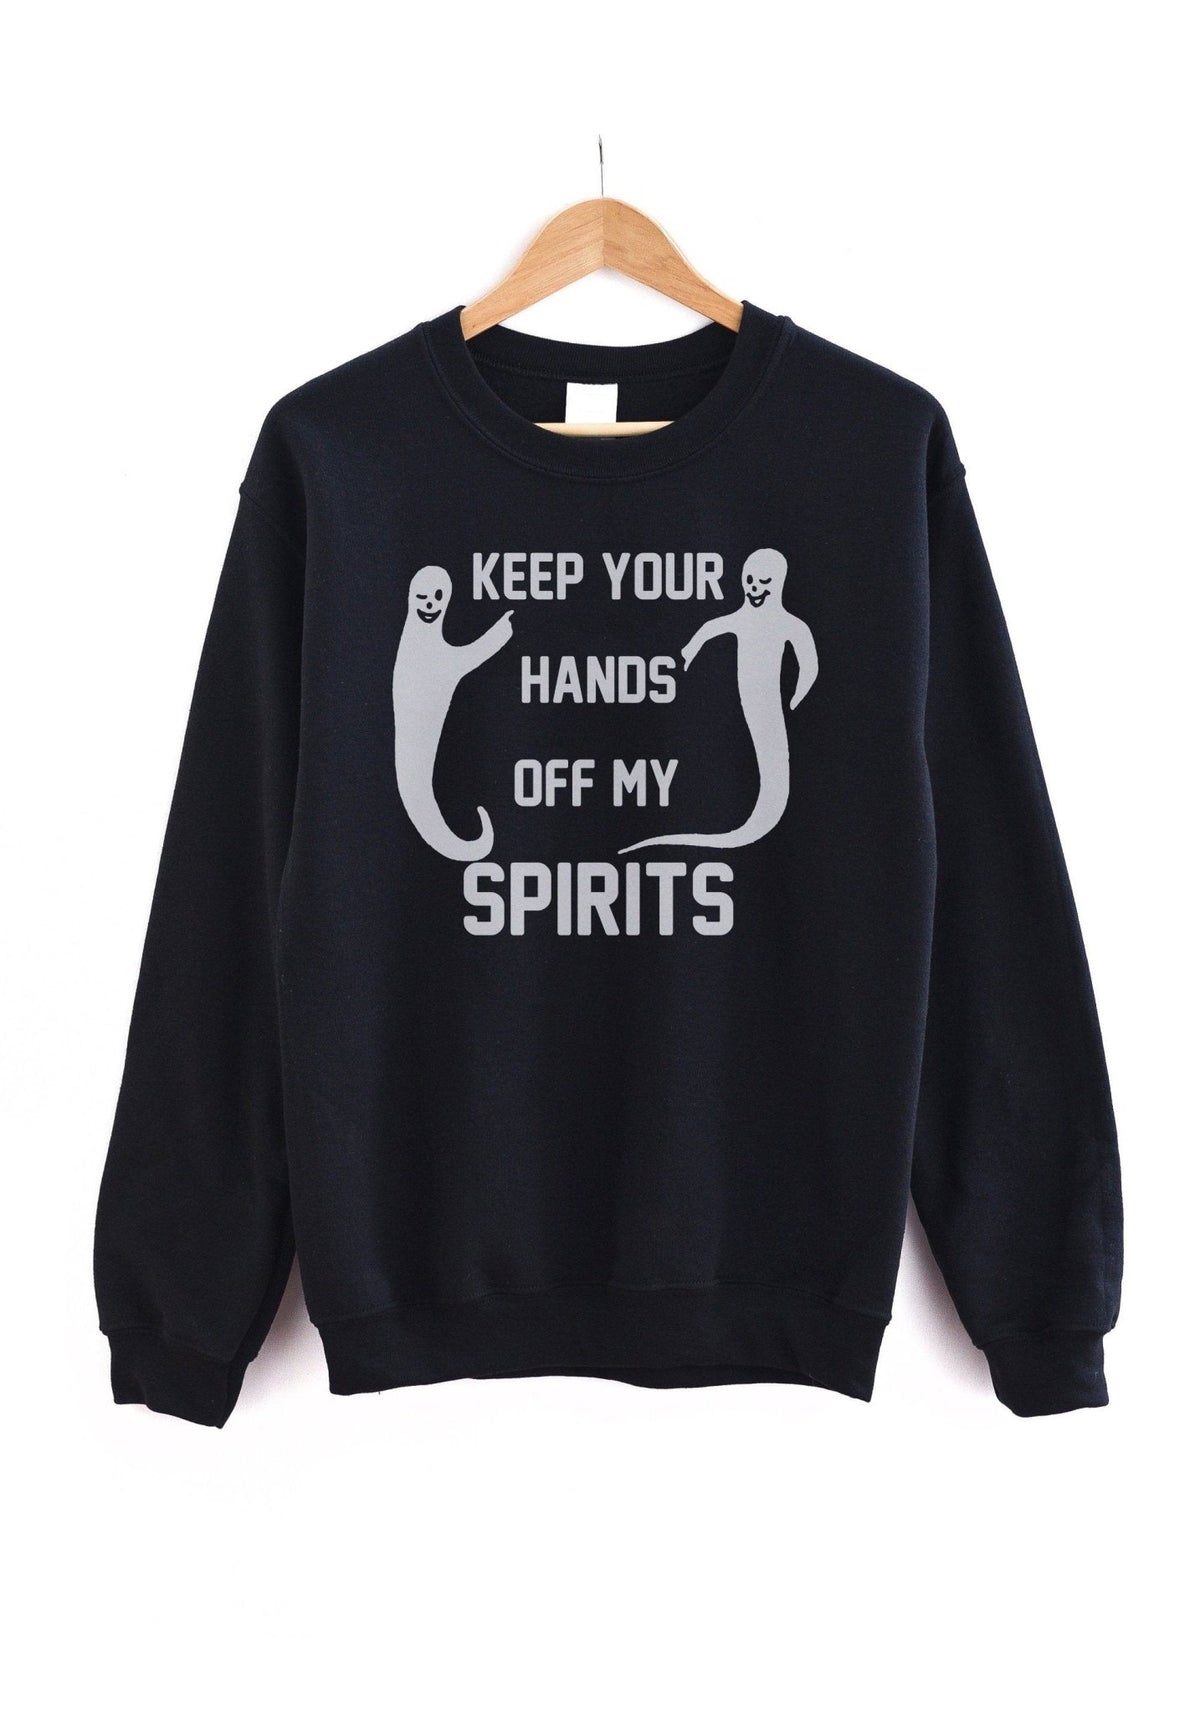 Hands Off My Spirits Sweatshirt by kaeraz dead ghost ghosts